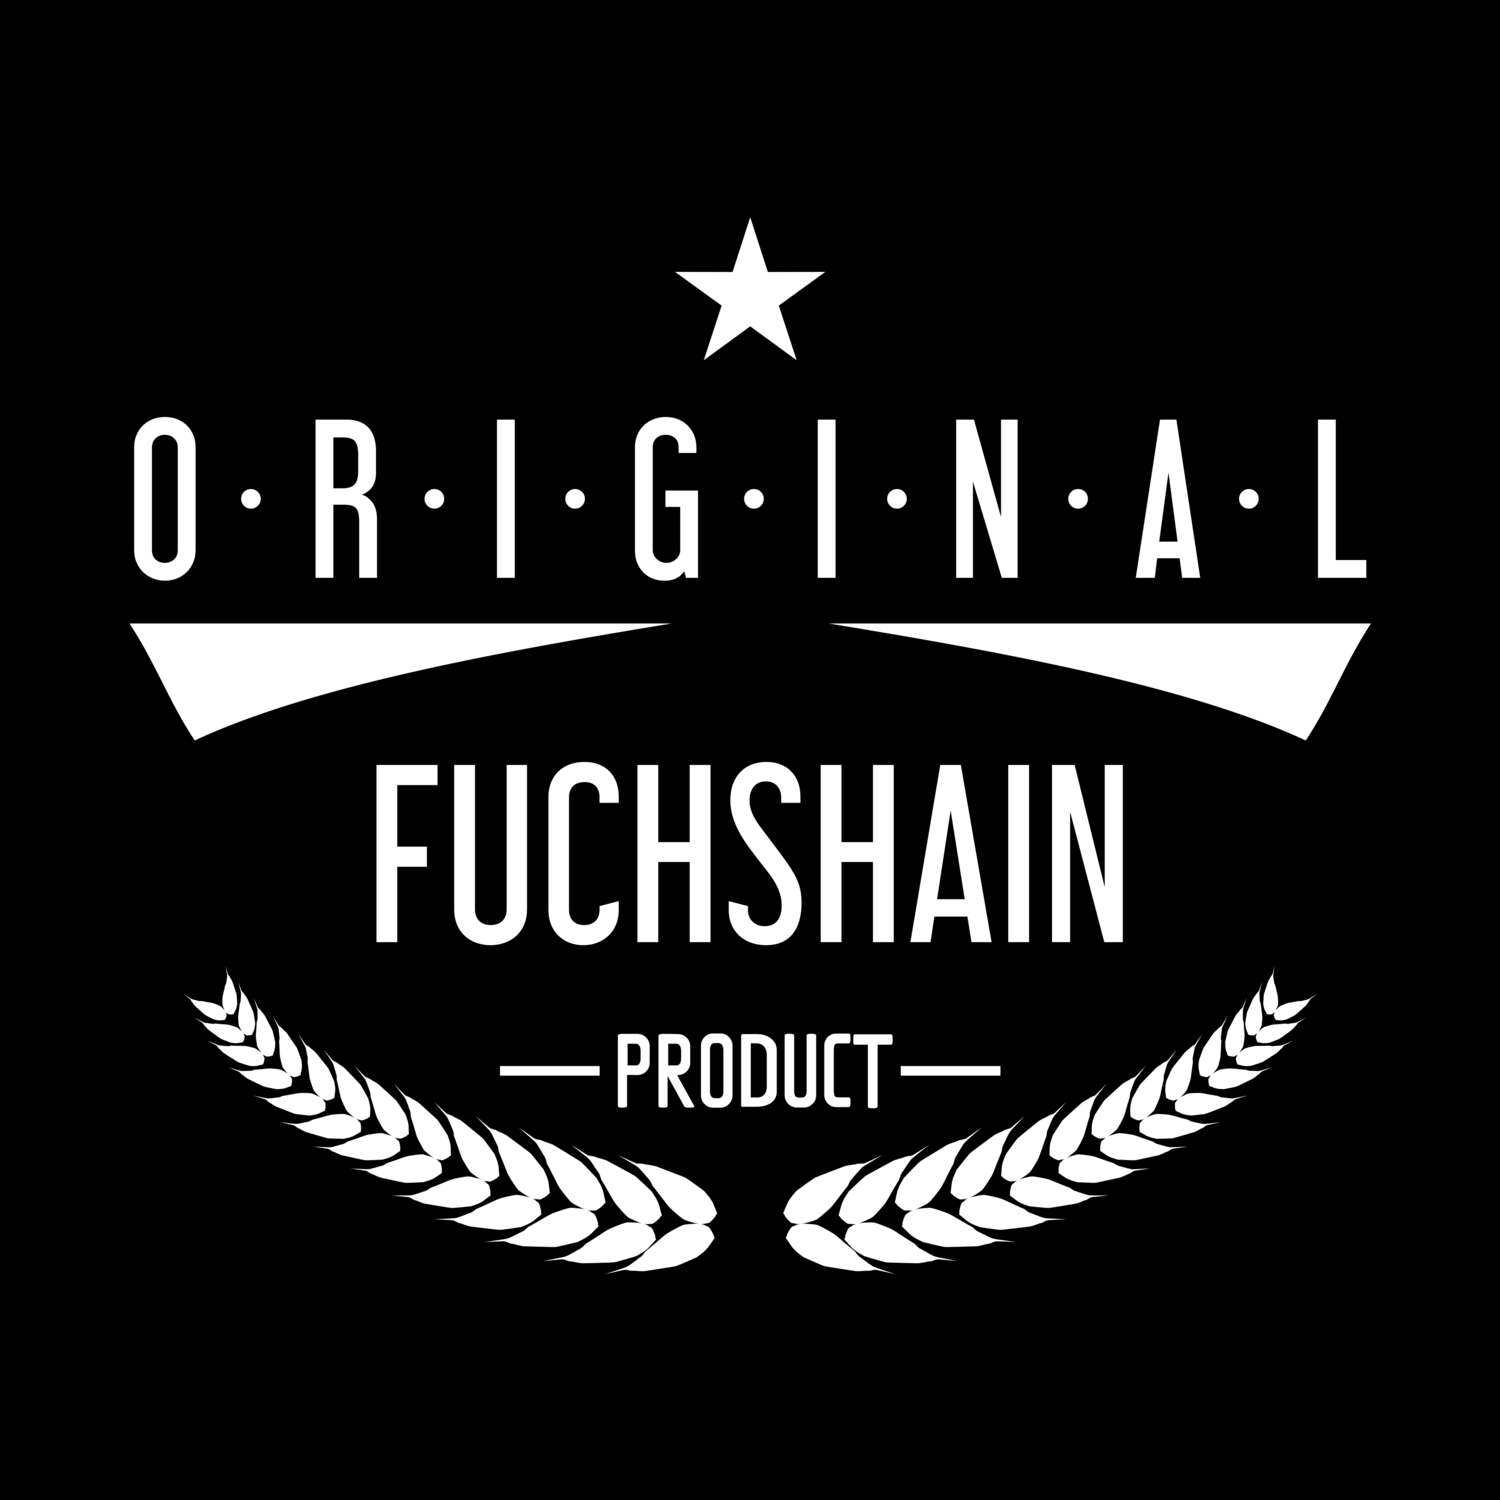 Fuchshain T-Shirt »Original Product«